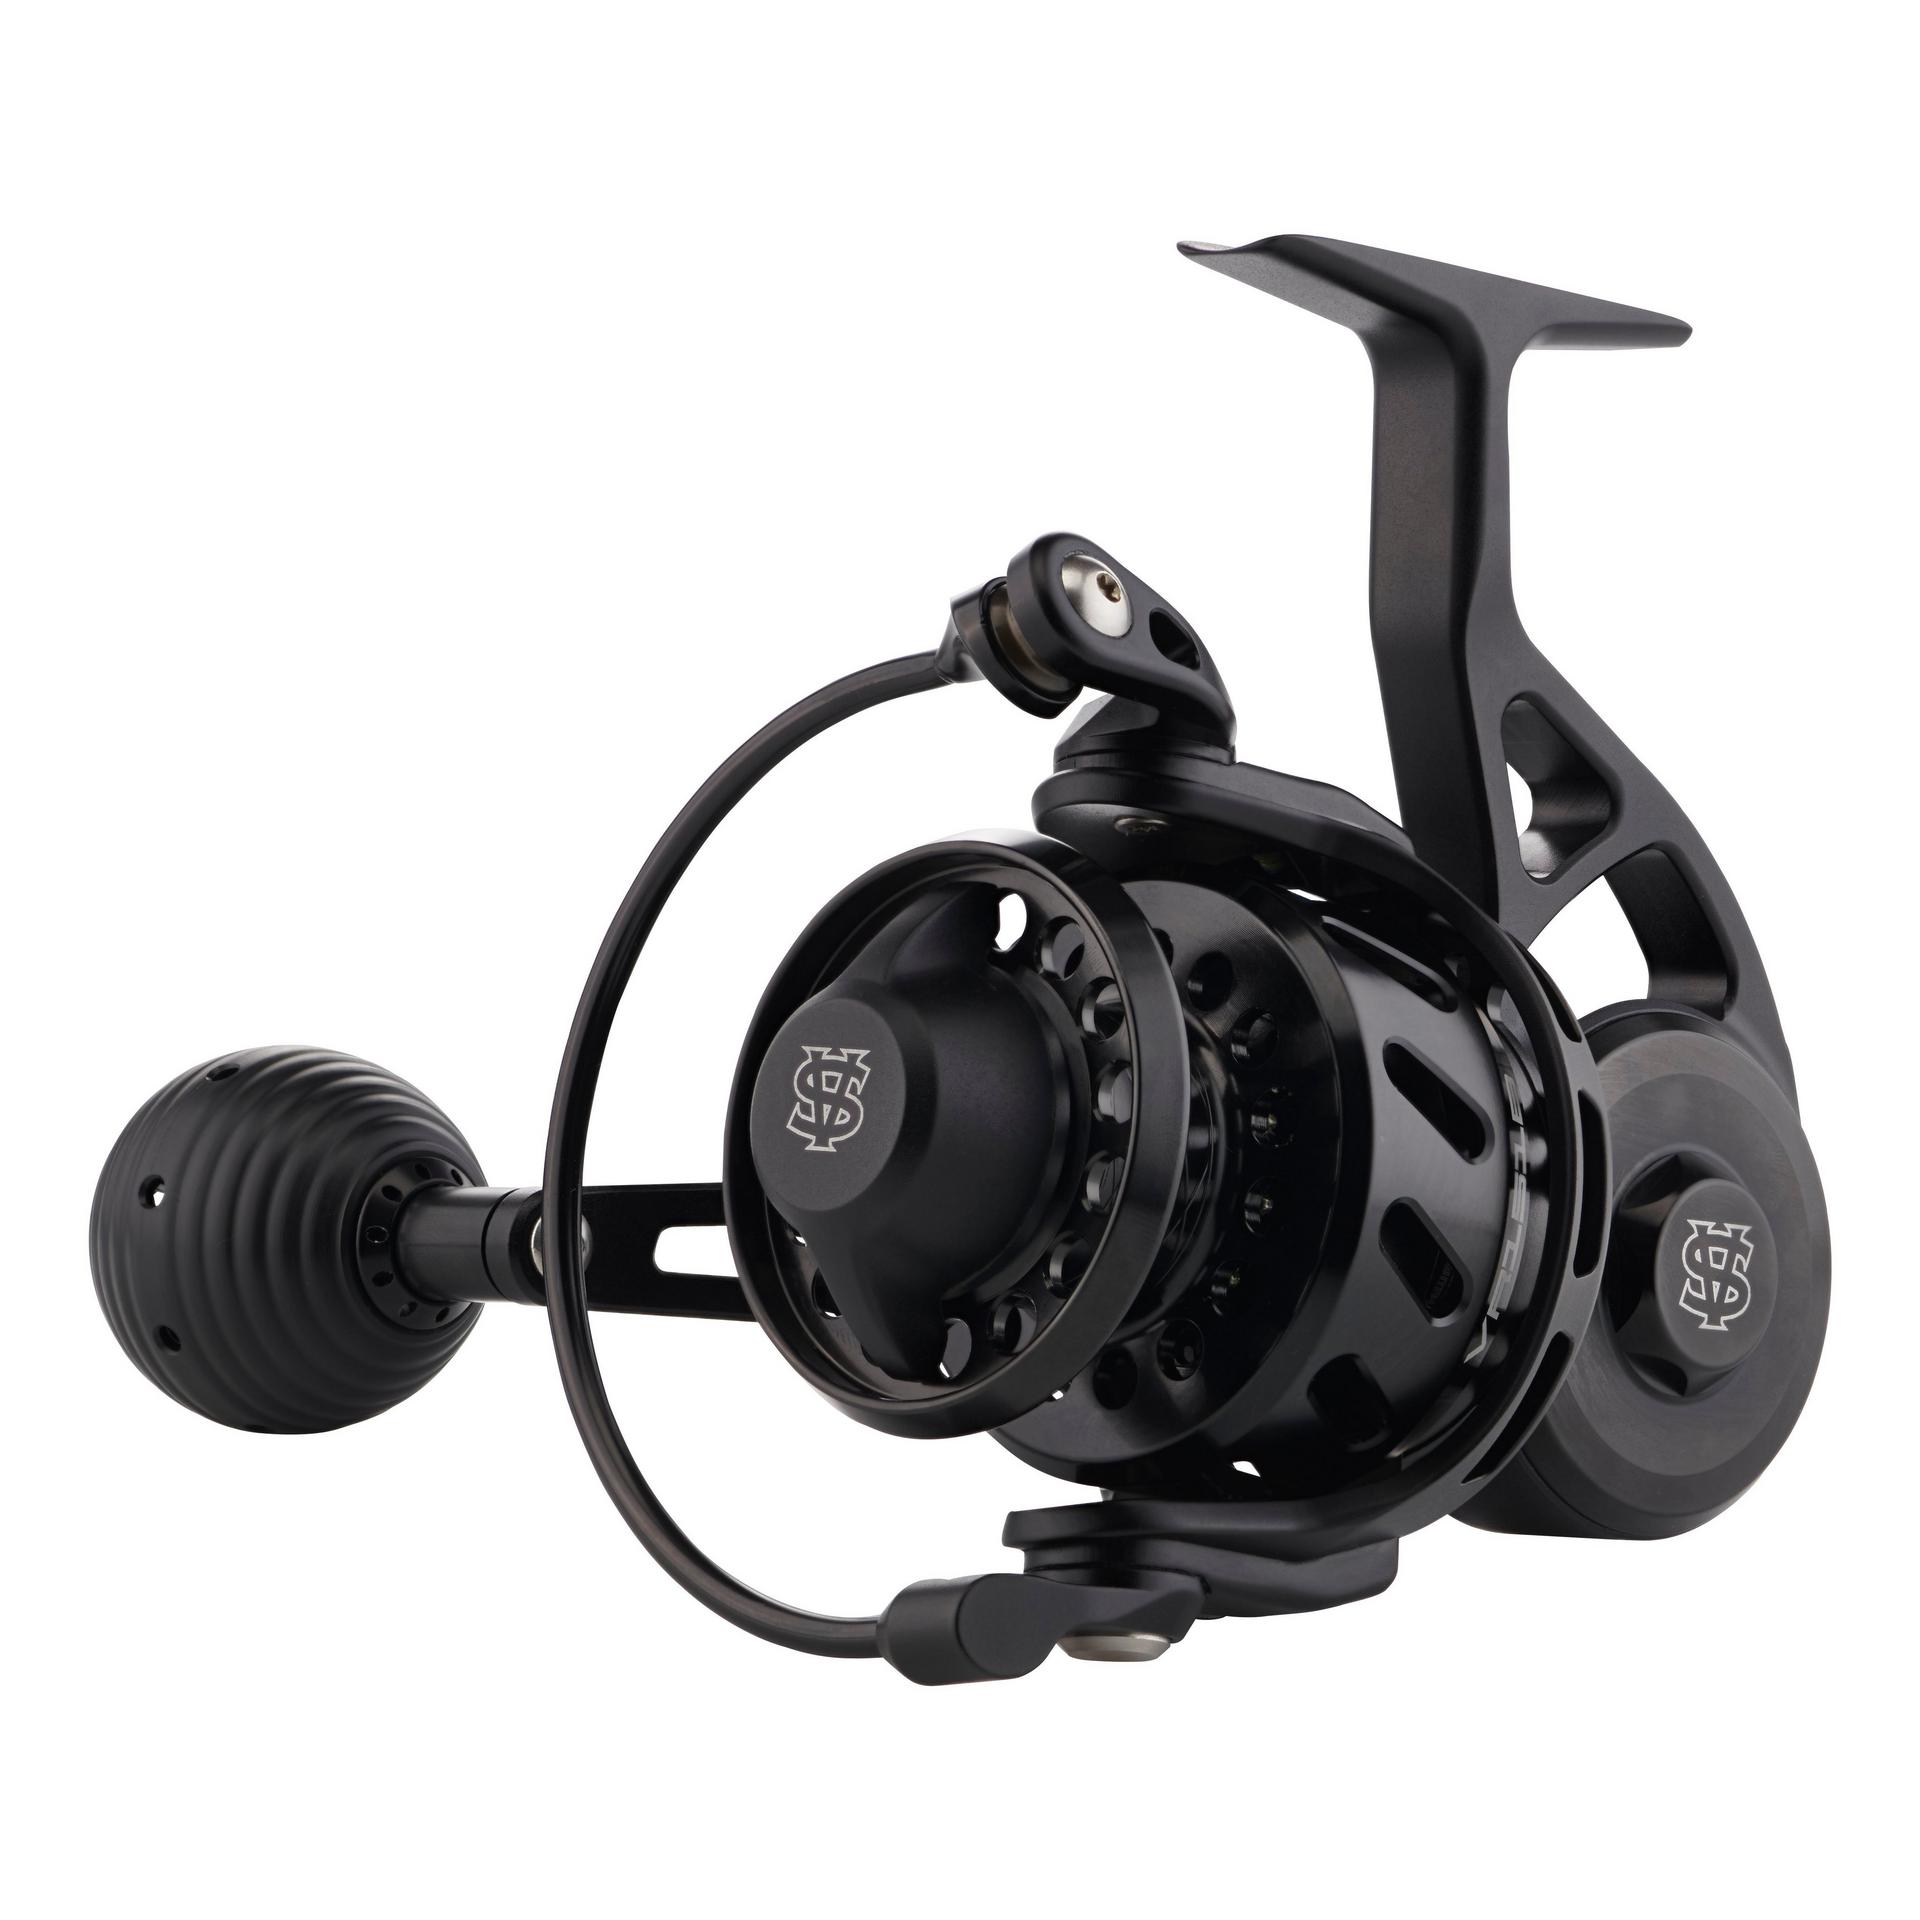 Van Staal VR Series VR150 Silver Bailed Fixed Spool Spinning Fishing Reel  854692001643